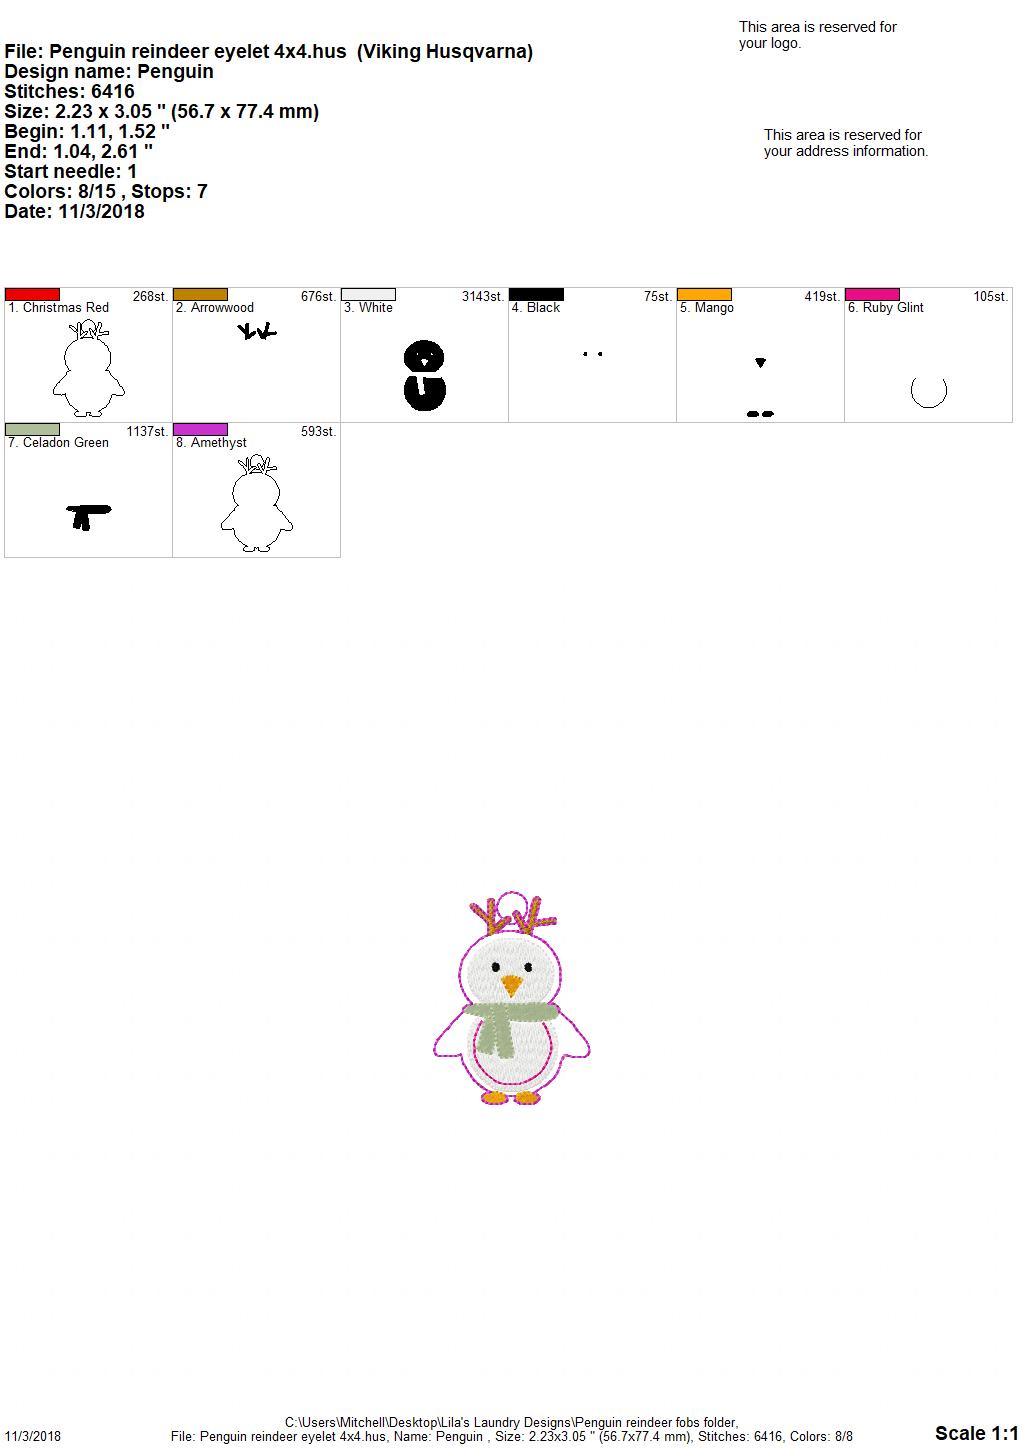 Penguin Reindeer Fobs - Embroidery Design - DIGITAL Embroidery DESIGN